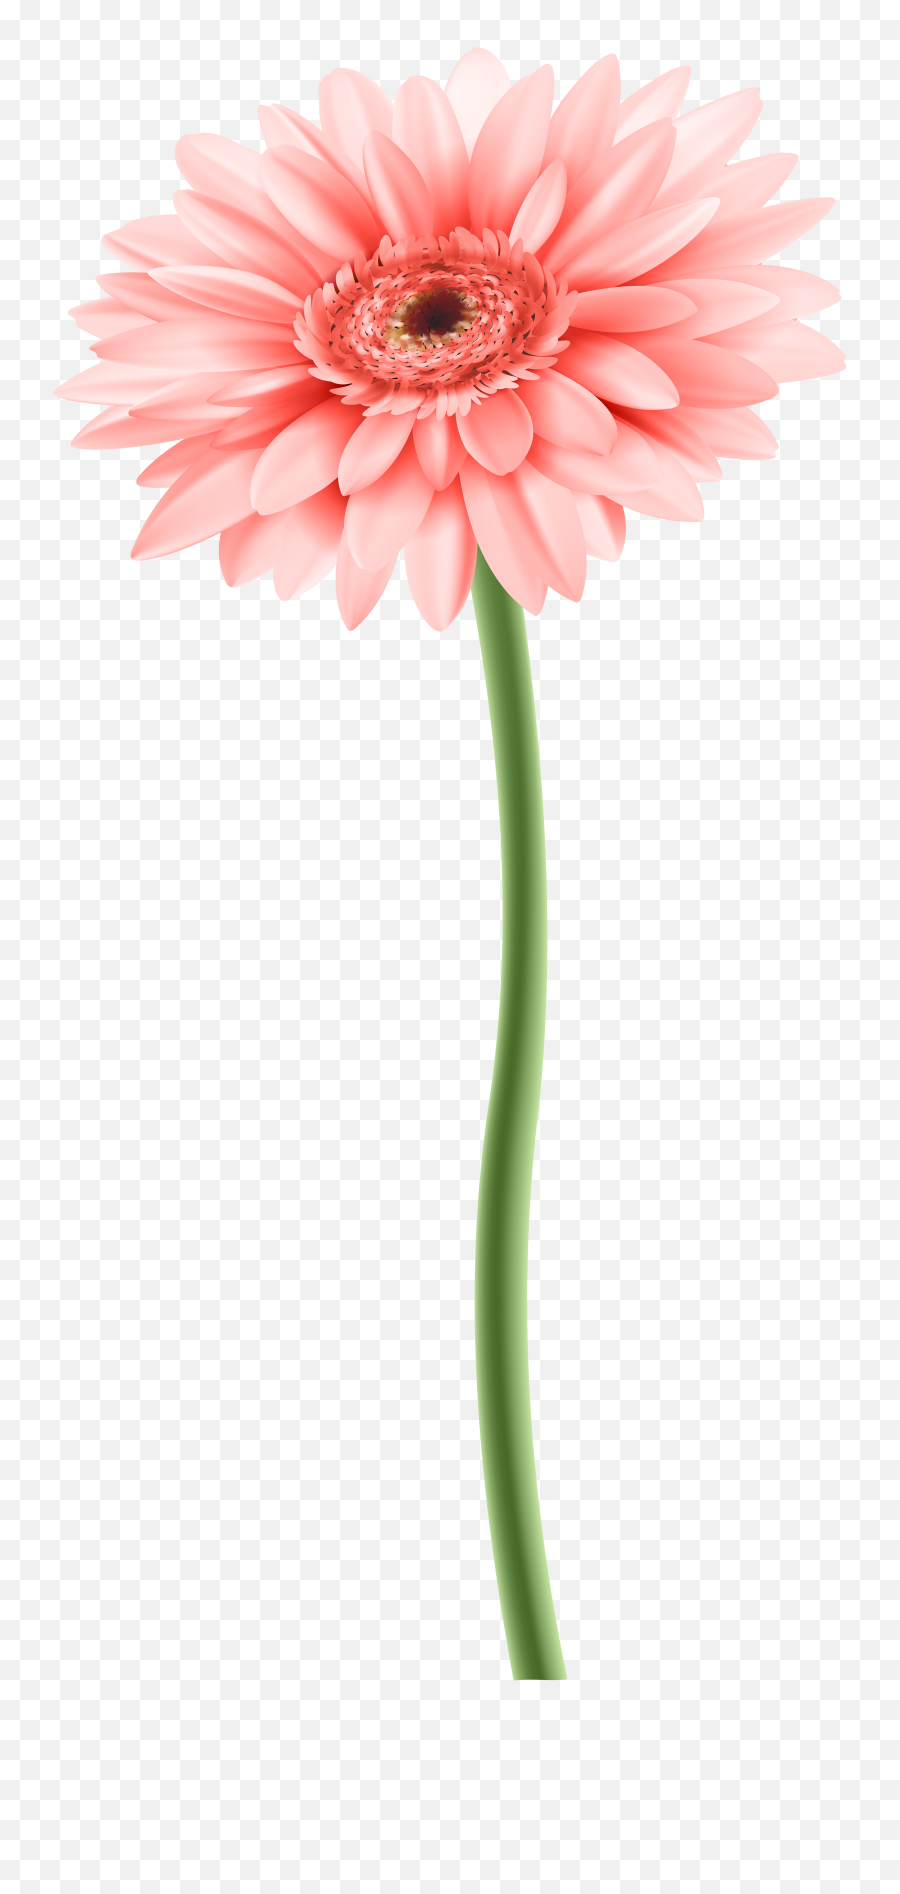 Download Flower With Stem Png Image - Flower With Stem Png,Flower Stem Png